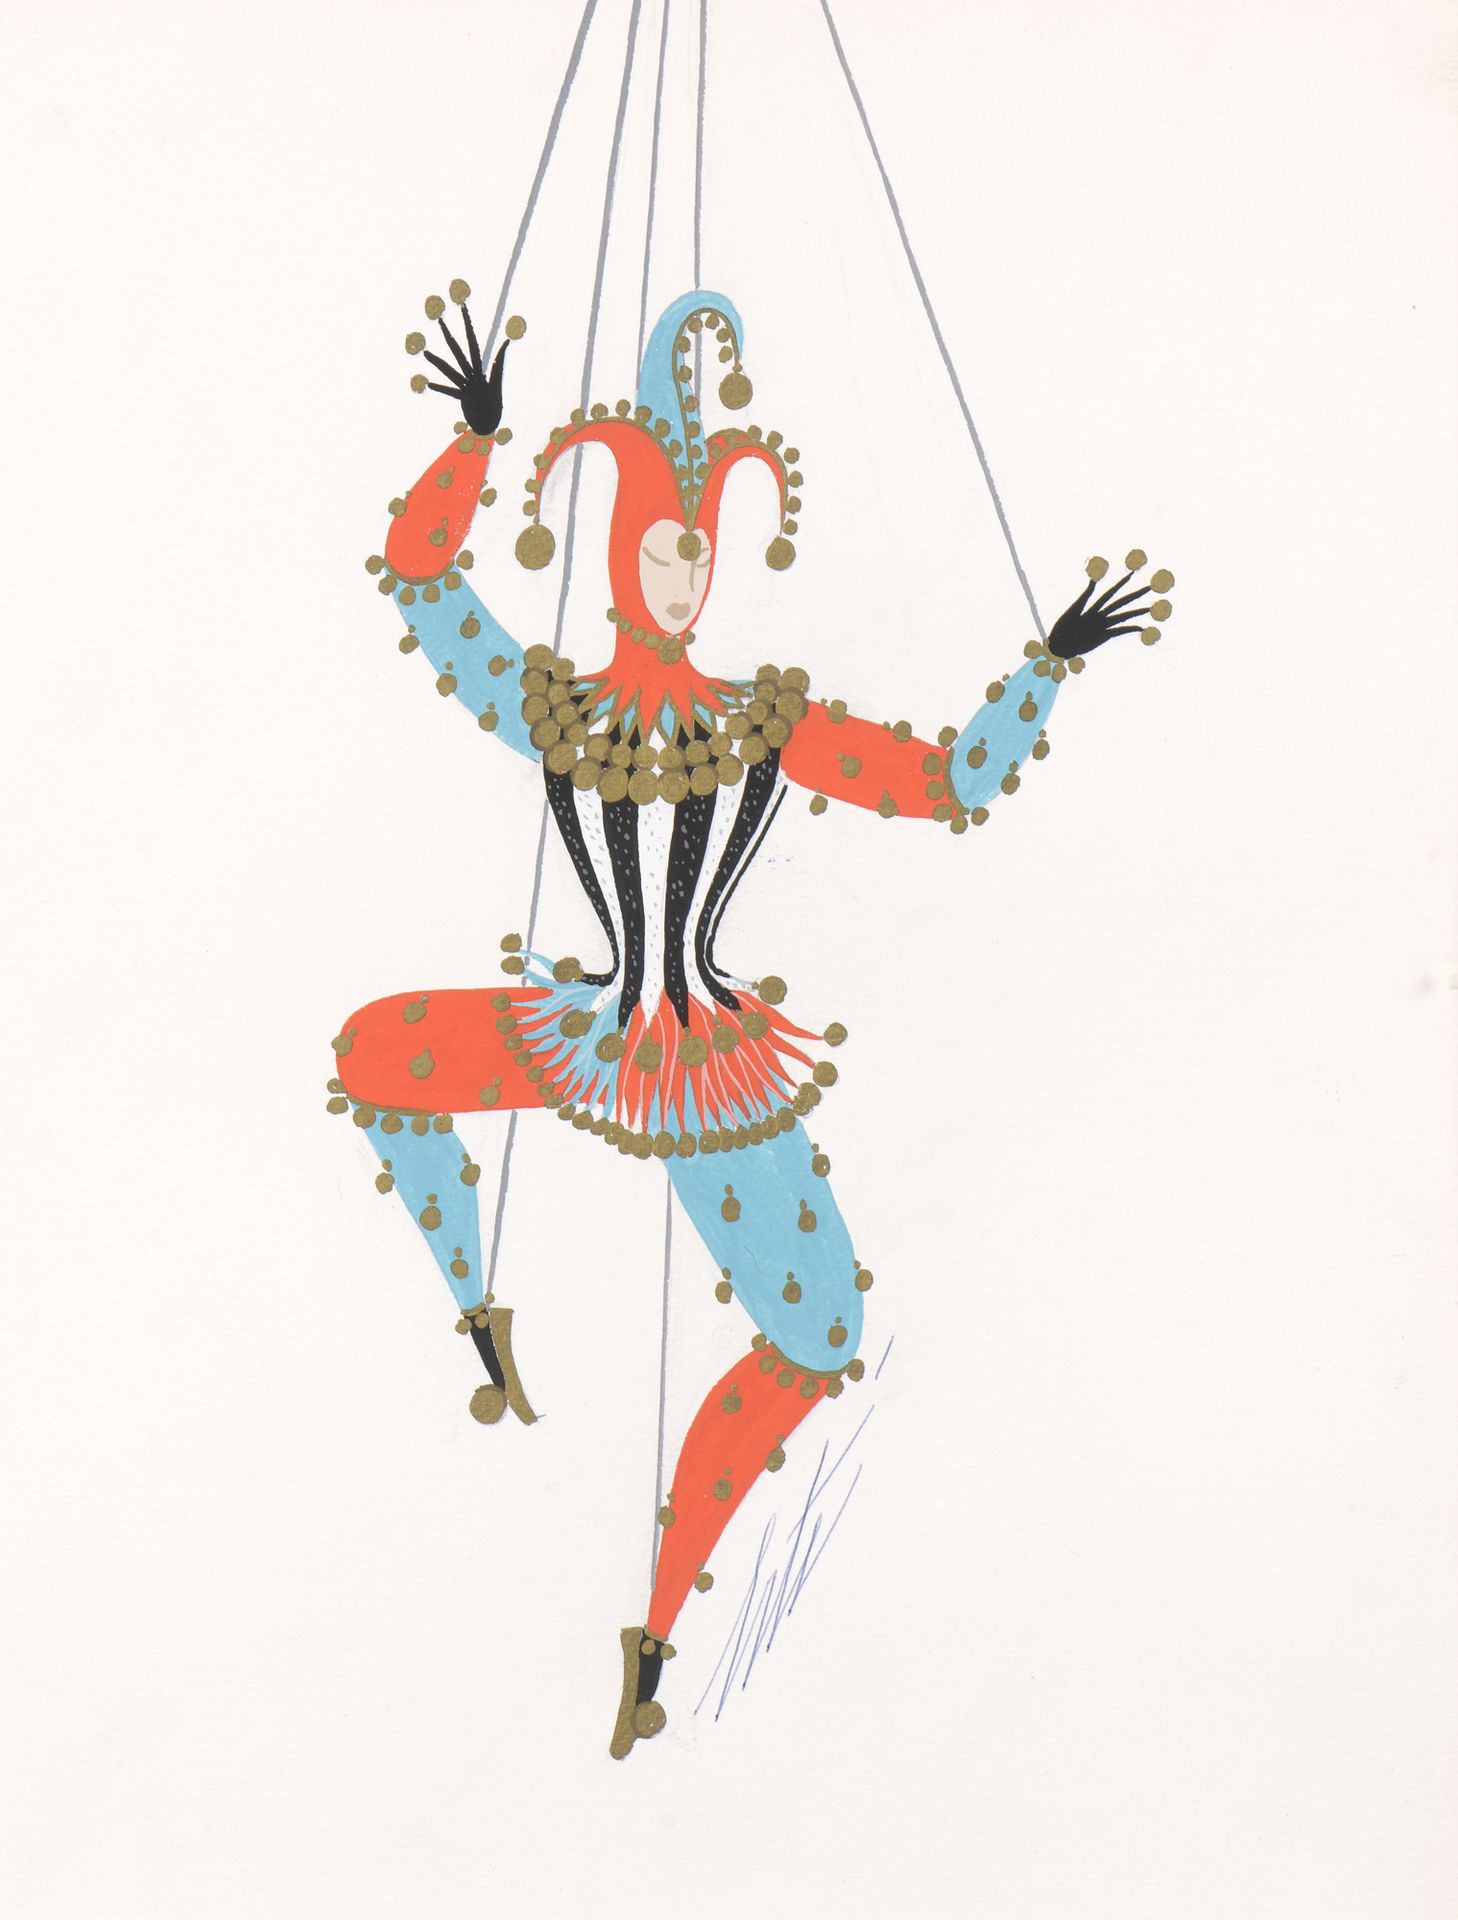 Null Romain de Tirtoff known as ERTÉ (1892-1990)

Toys

Costume study for Les Pa&hellip;